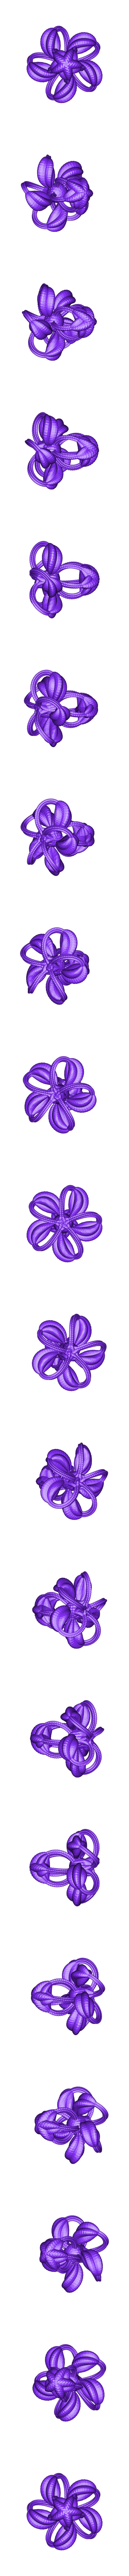 spore_16.stl Download free STL file Spores • 3D print design, ferjerez3d